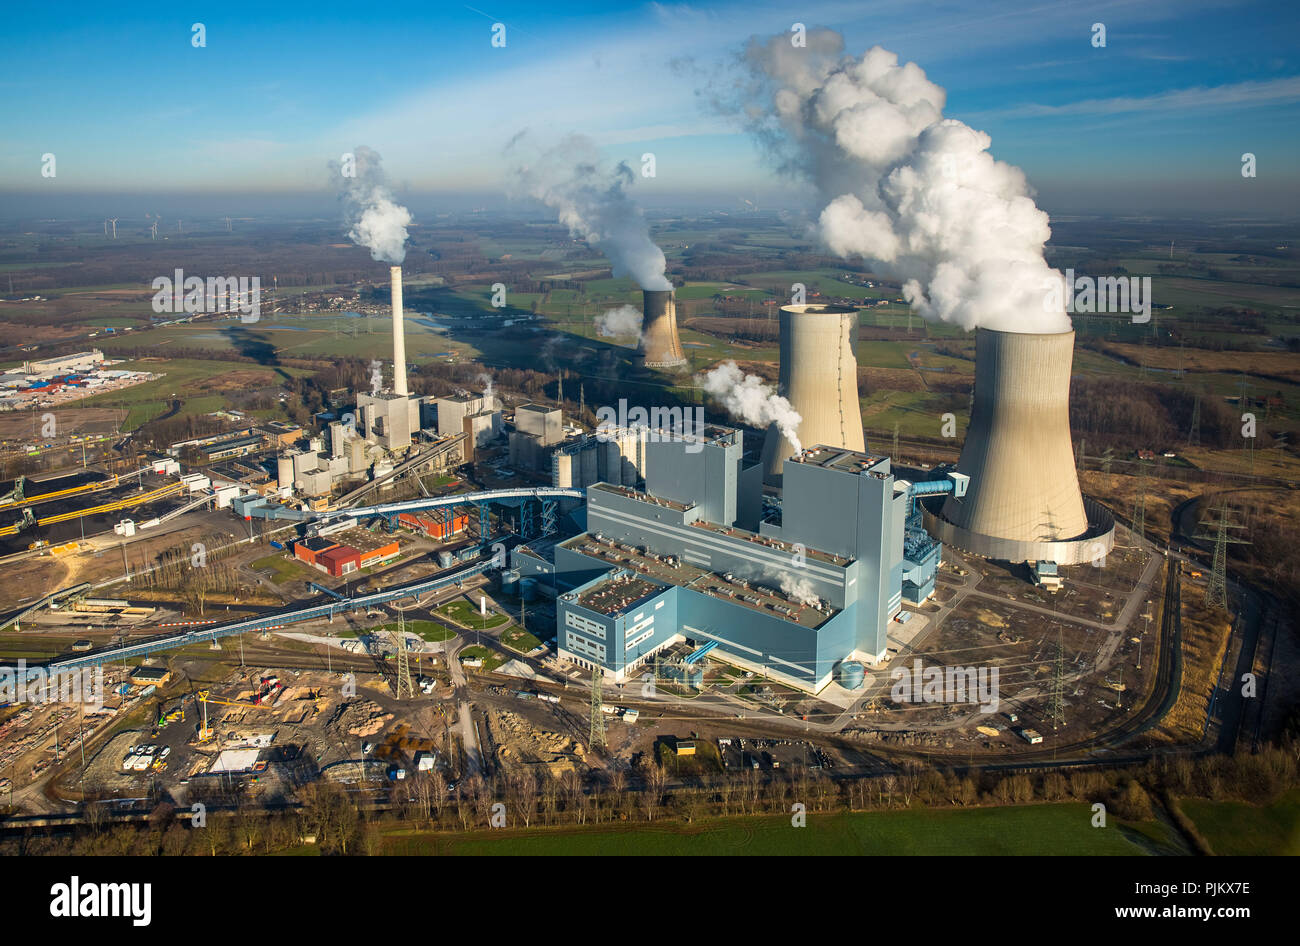 Westfalen power station RWE power, coal power plant, former nuclear power plant THTR Hamm Uentrop, Welver, Ruhr area, North Rhine-Westphalia, Germany Stock Photo